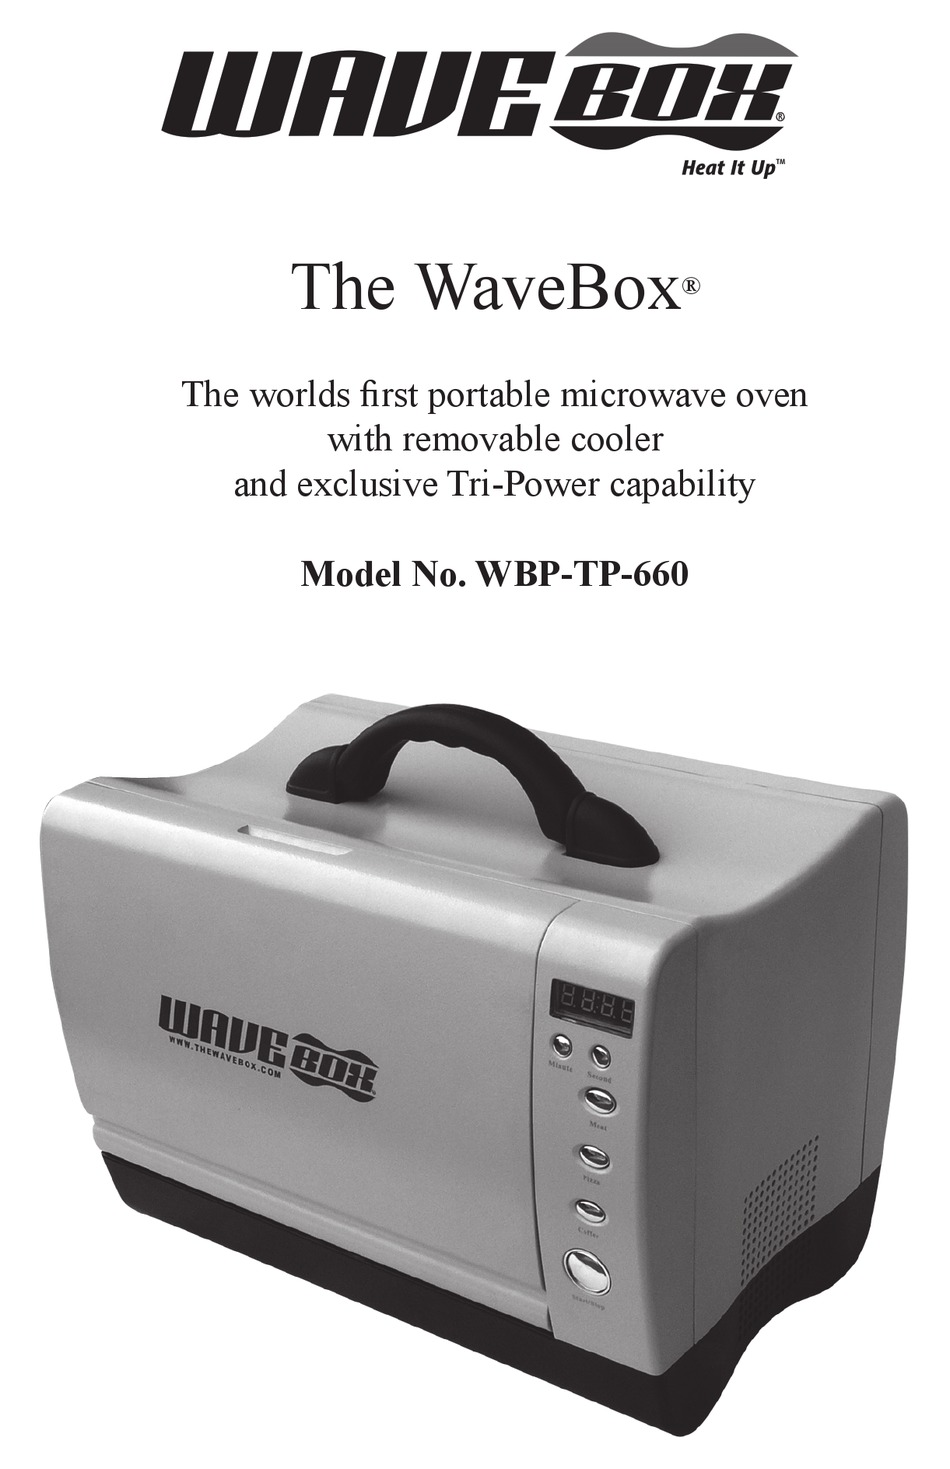 WAVEBOX WBP-TP-660 MICROWAVE OVEN USER MANUAL | ManualsLib